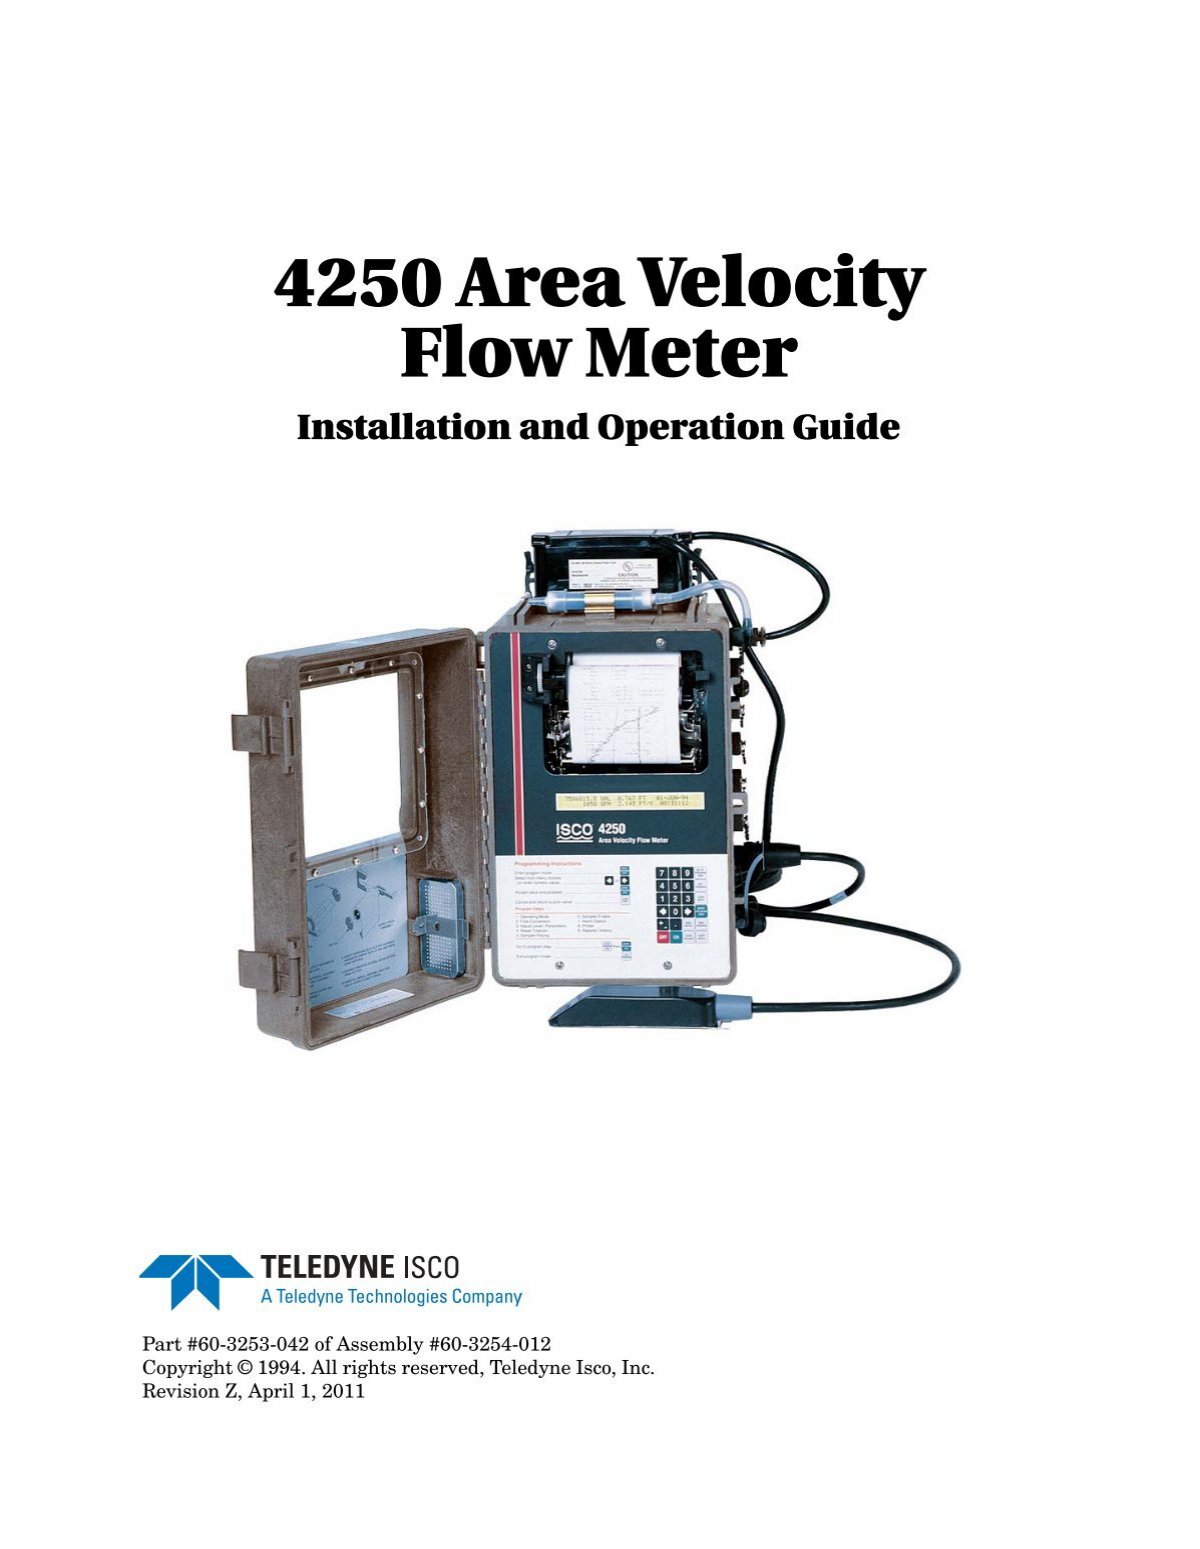 4250 Area Velocity Flow Meter - Isco